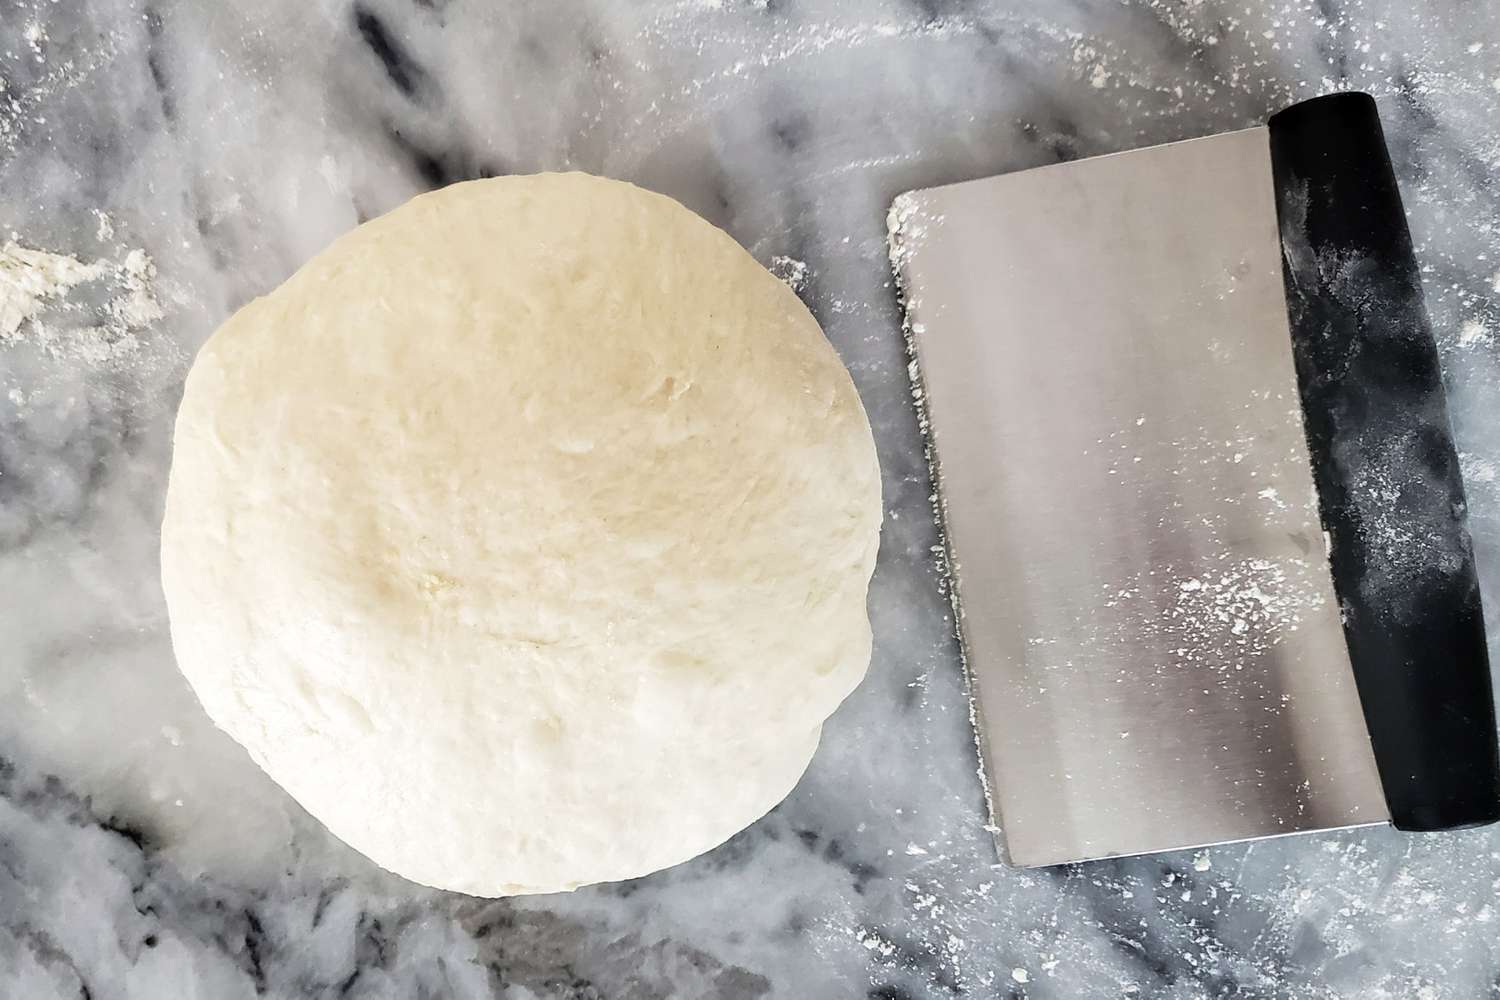 Shaping the bread dough for no-knead bread